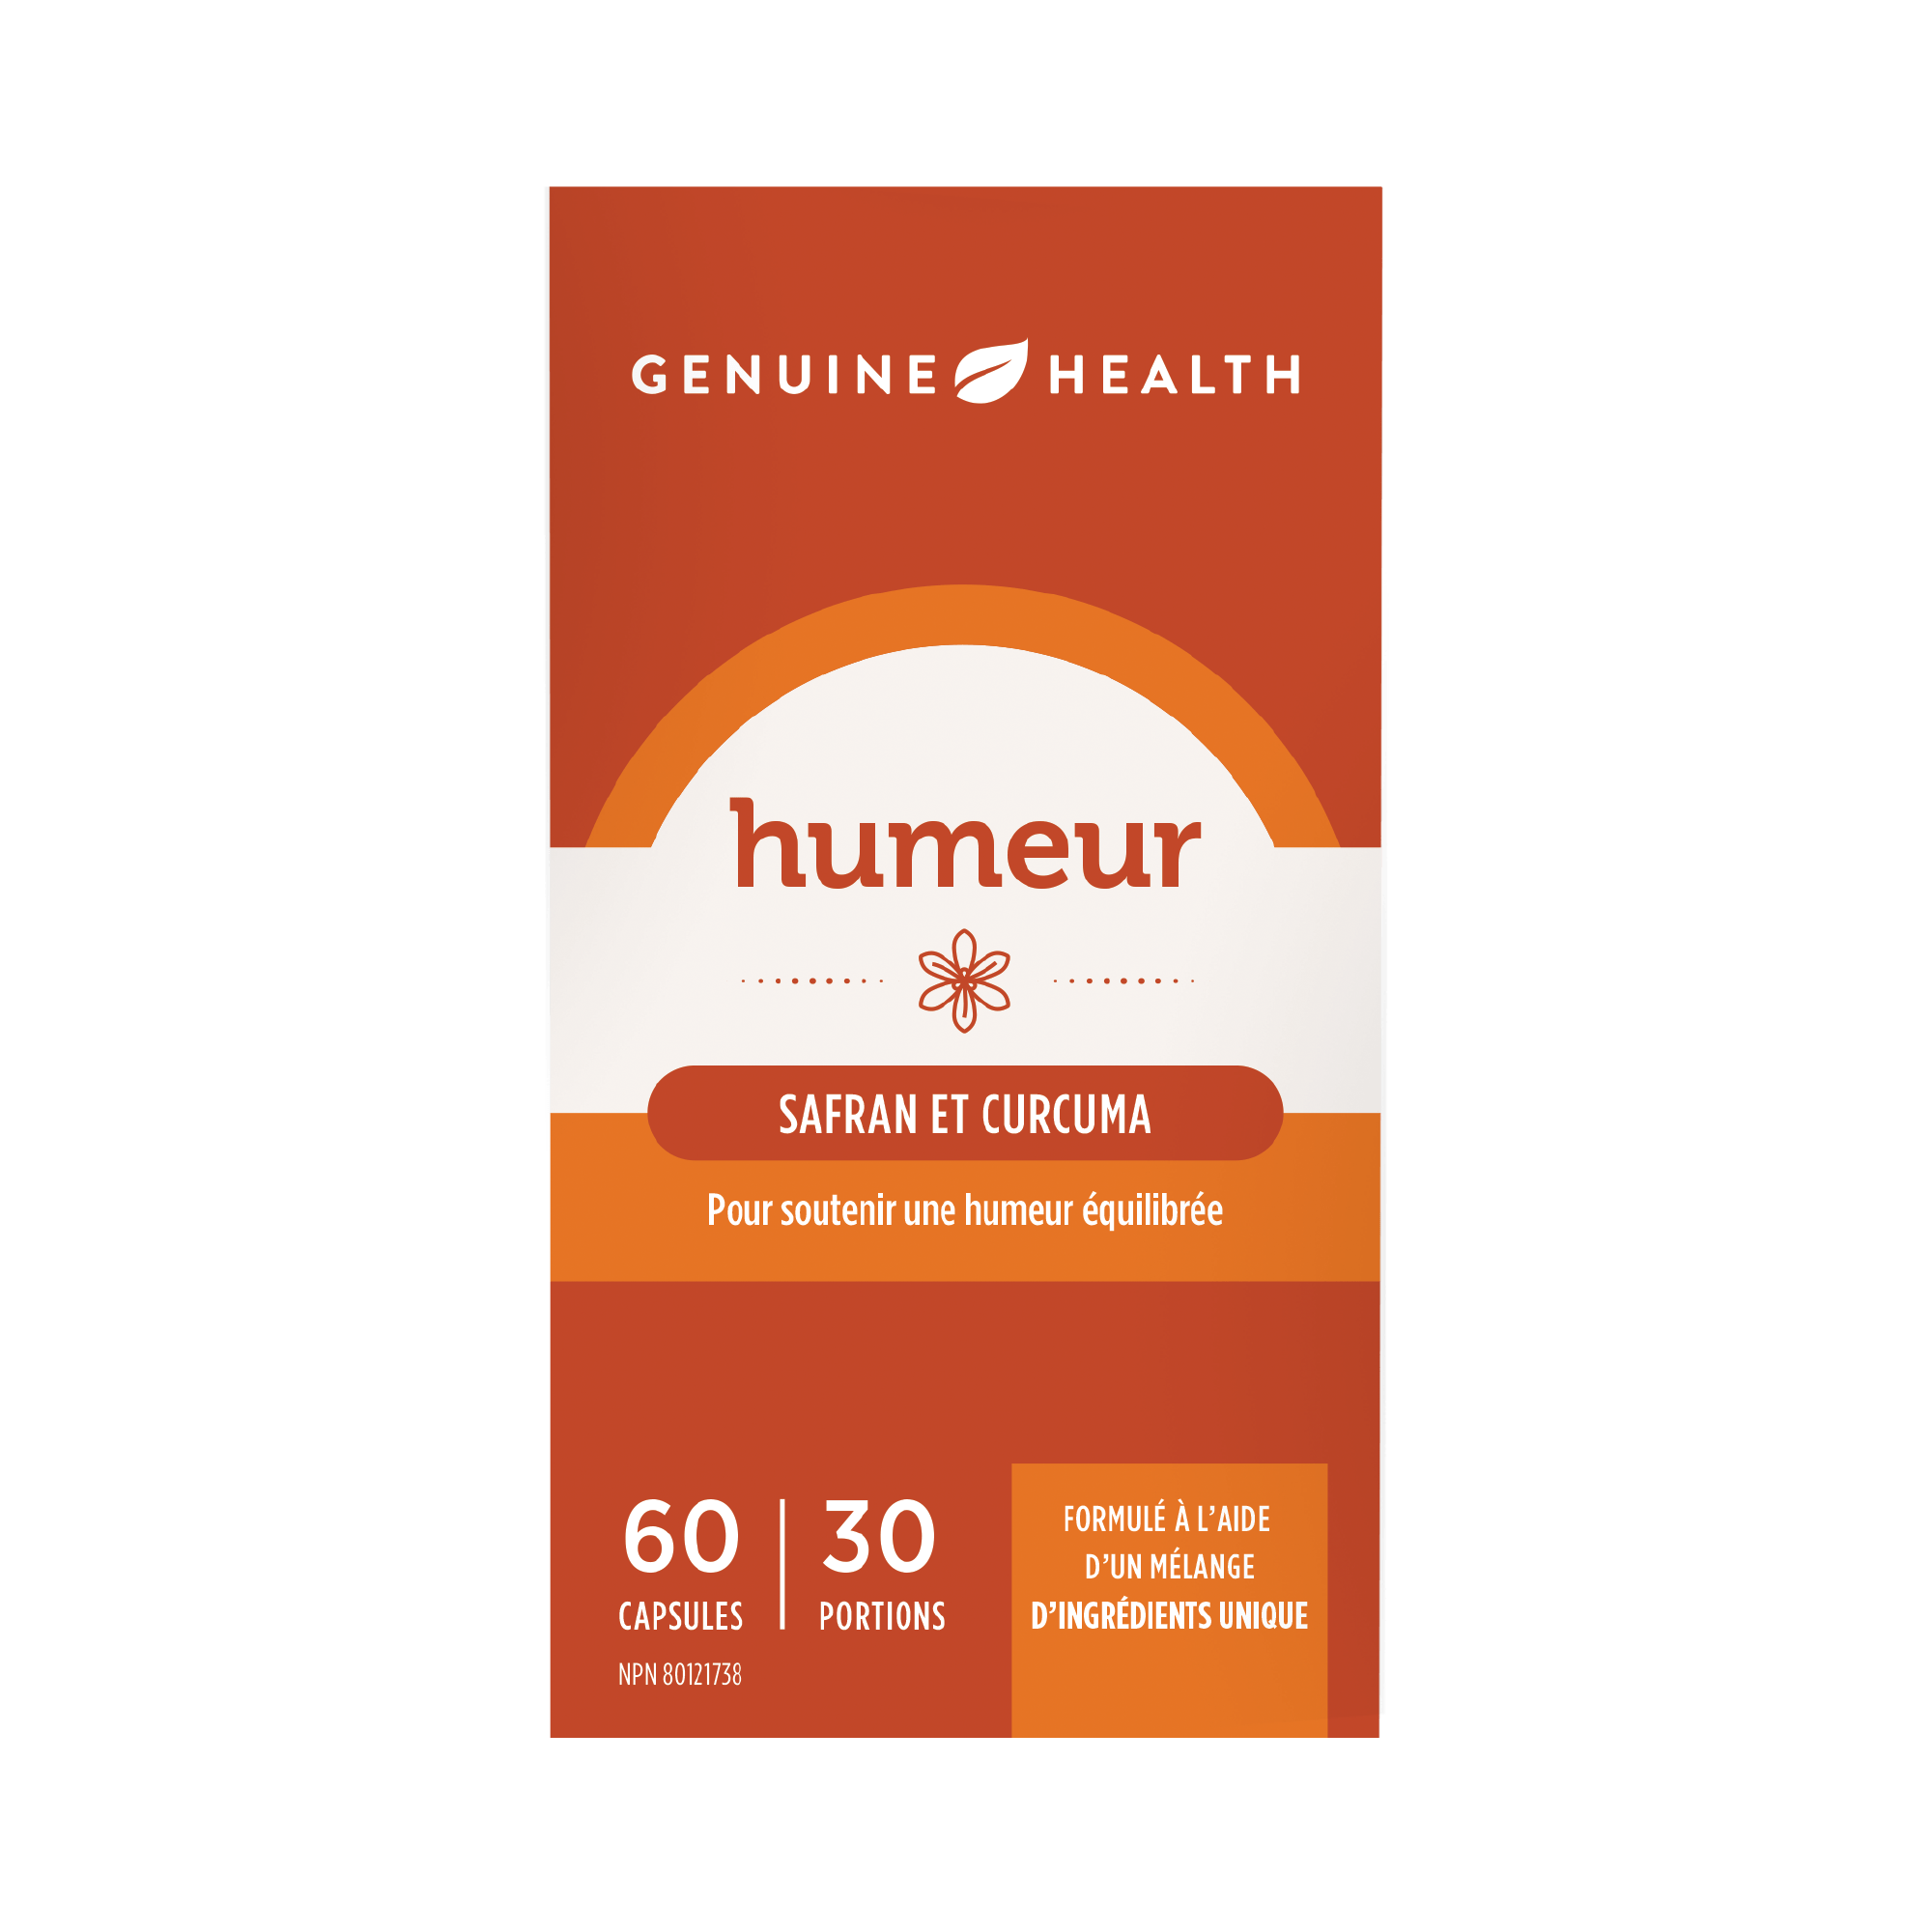 GENUINE HEALTH Suppléments Humeur (safran et curcuma) 60caps